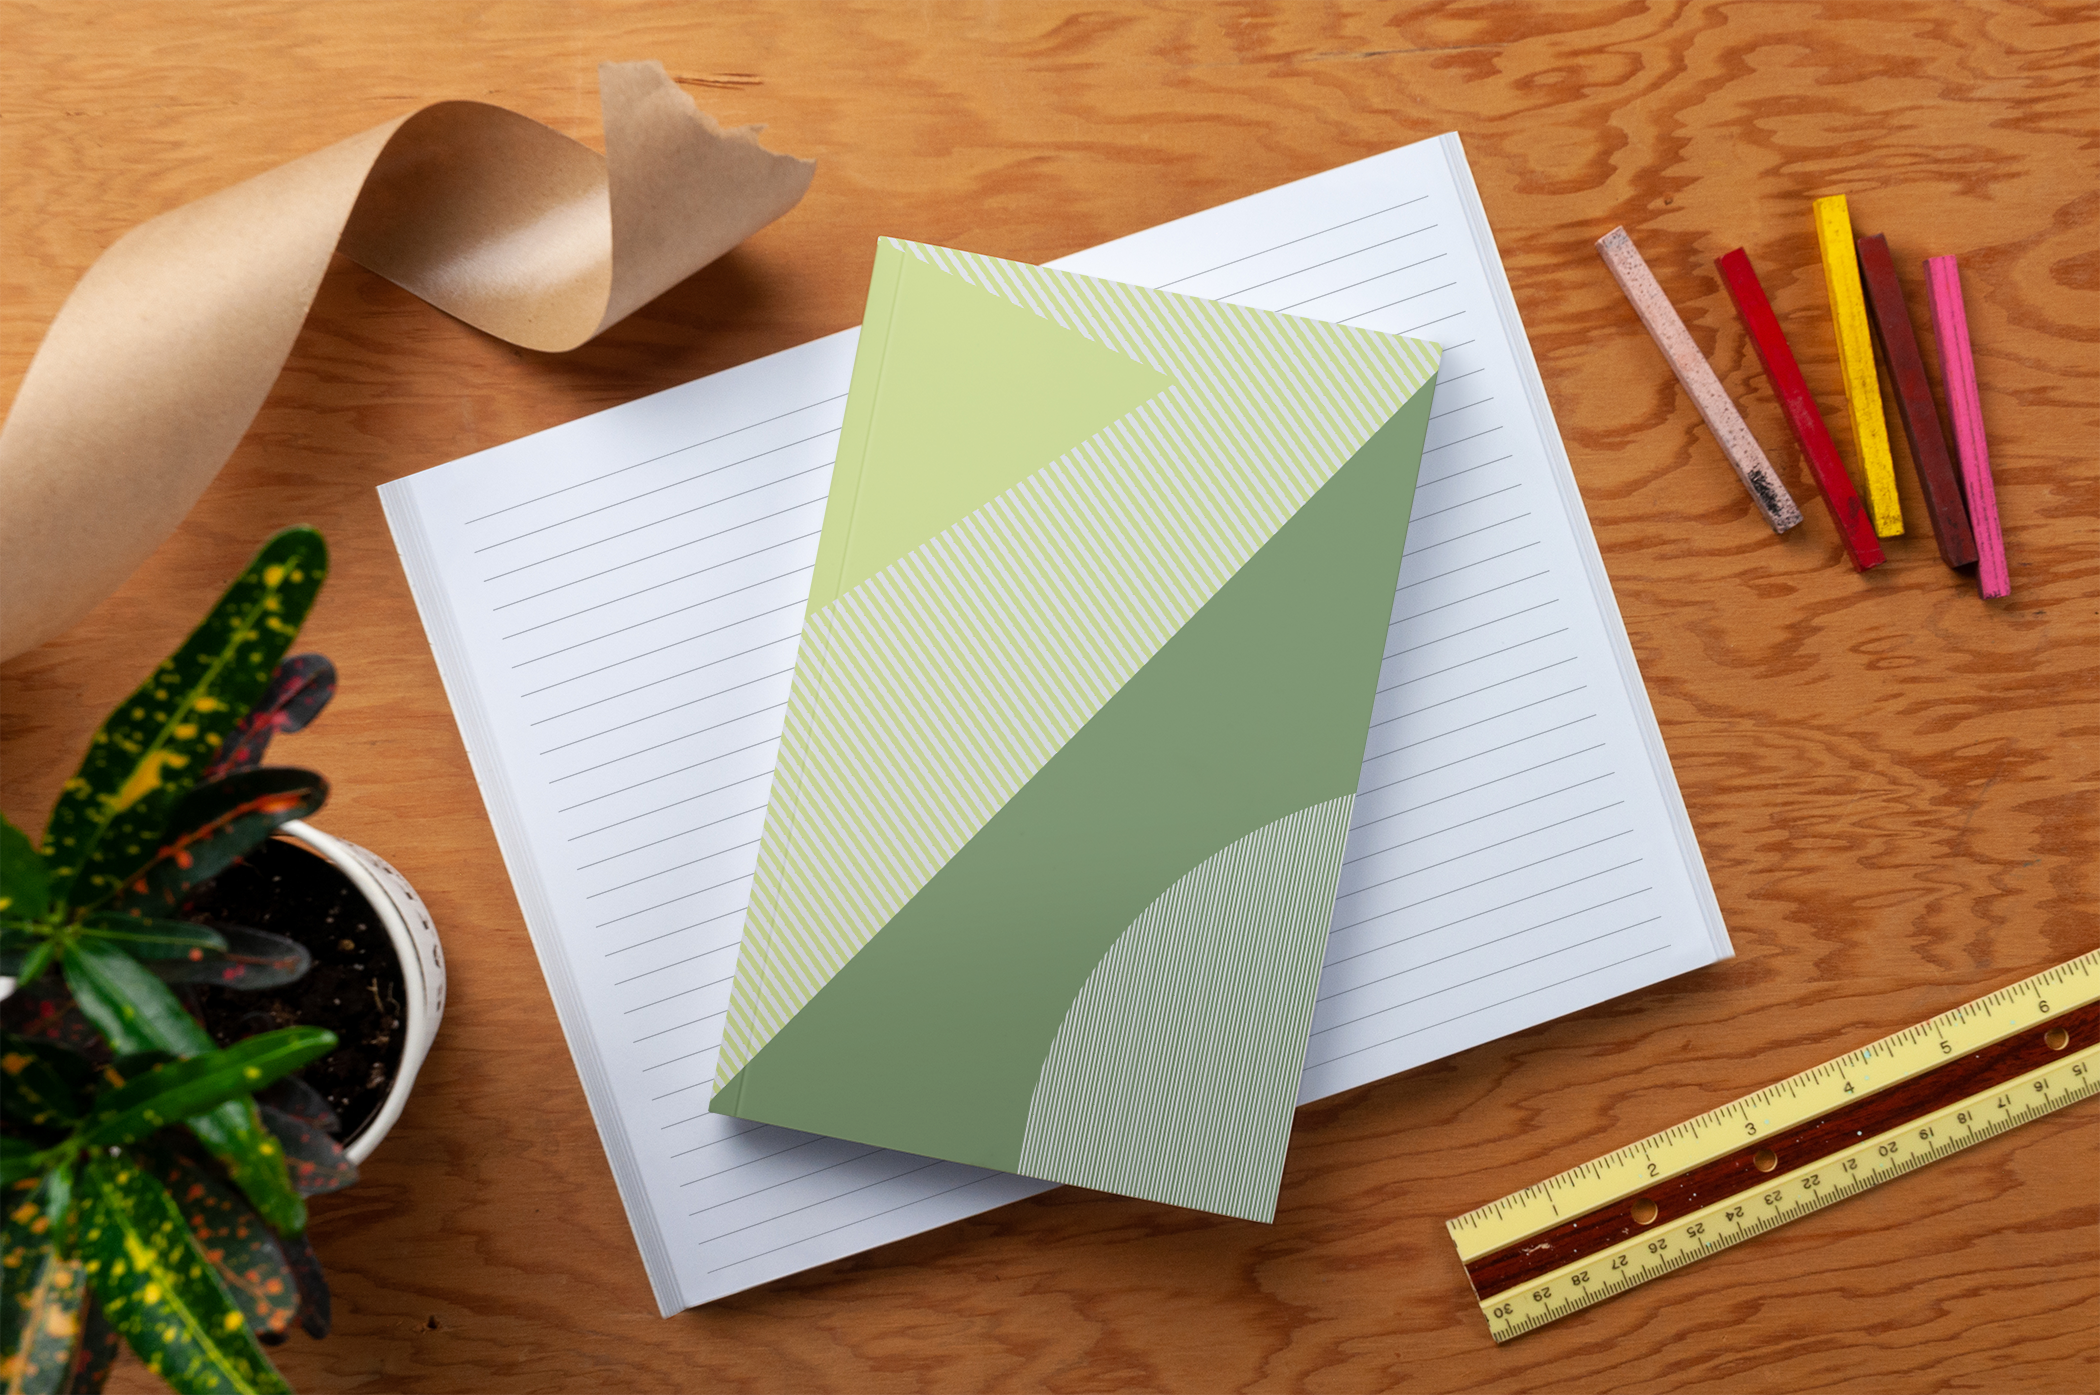 Abstract Triangular Classic Layflat Notebook